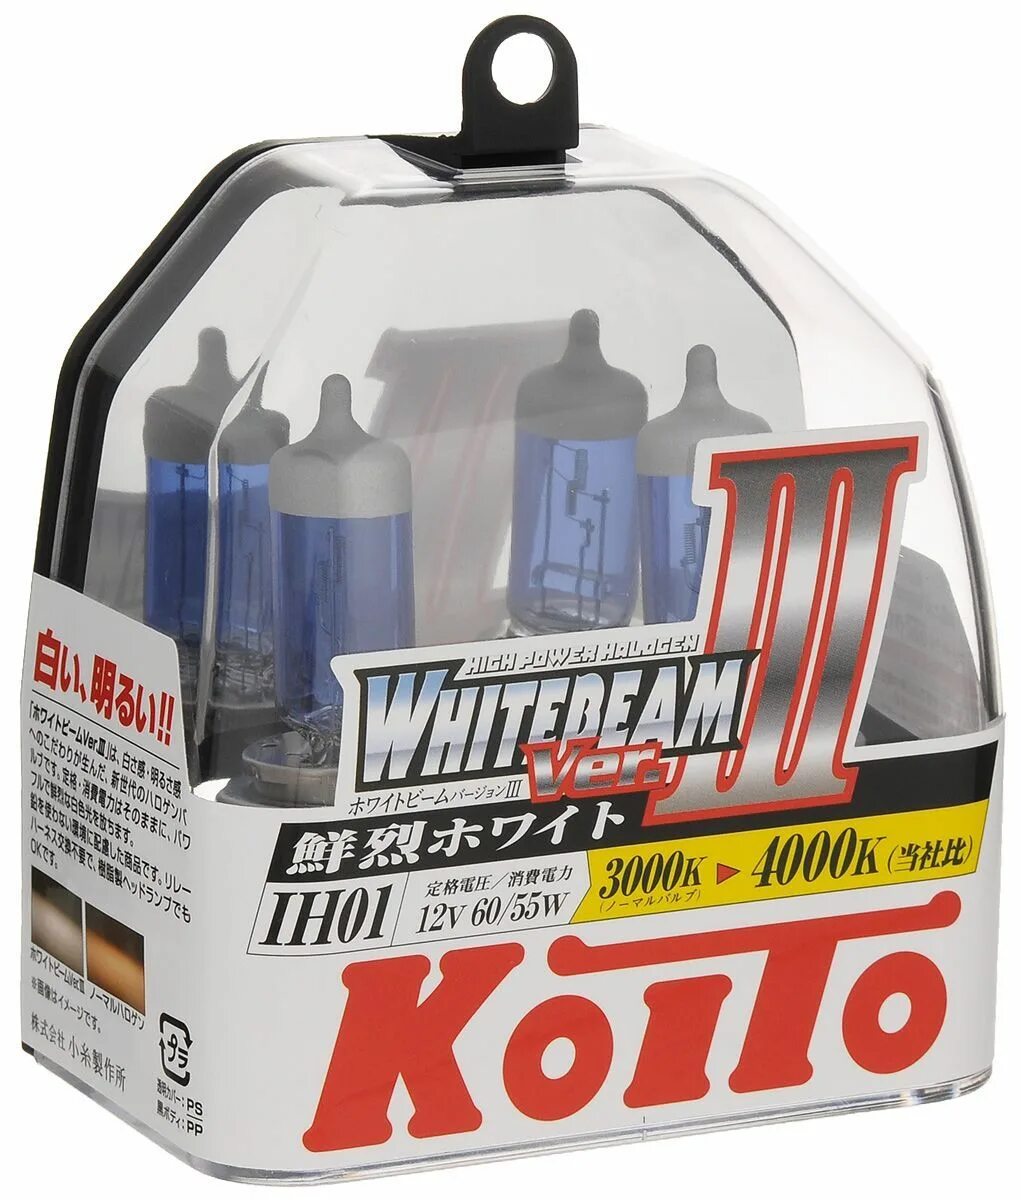 Лампа высокотемпературная Koito Whitebeam h4 12v 60/55w. Лампа высокотемпературная Koito Whitebeam. Лампа высокотемпературная Koito Whitebeam, 12v h4 100/90w p43t комплект. Koito p0745w ih01 Whitebeam. Koito whitebeam 12v 55w